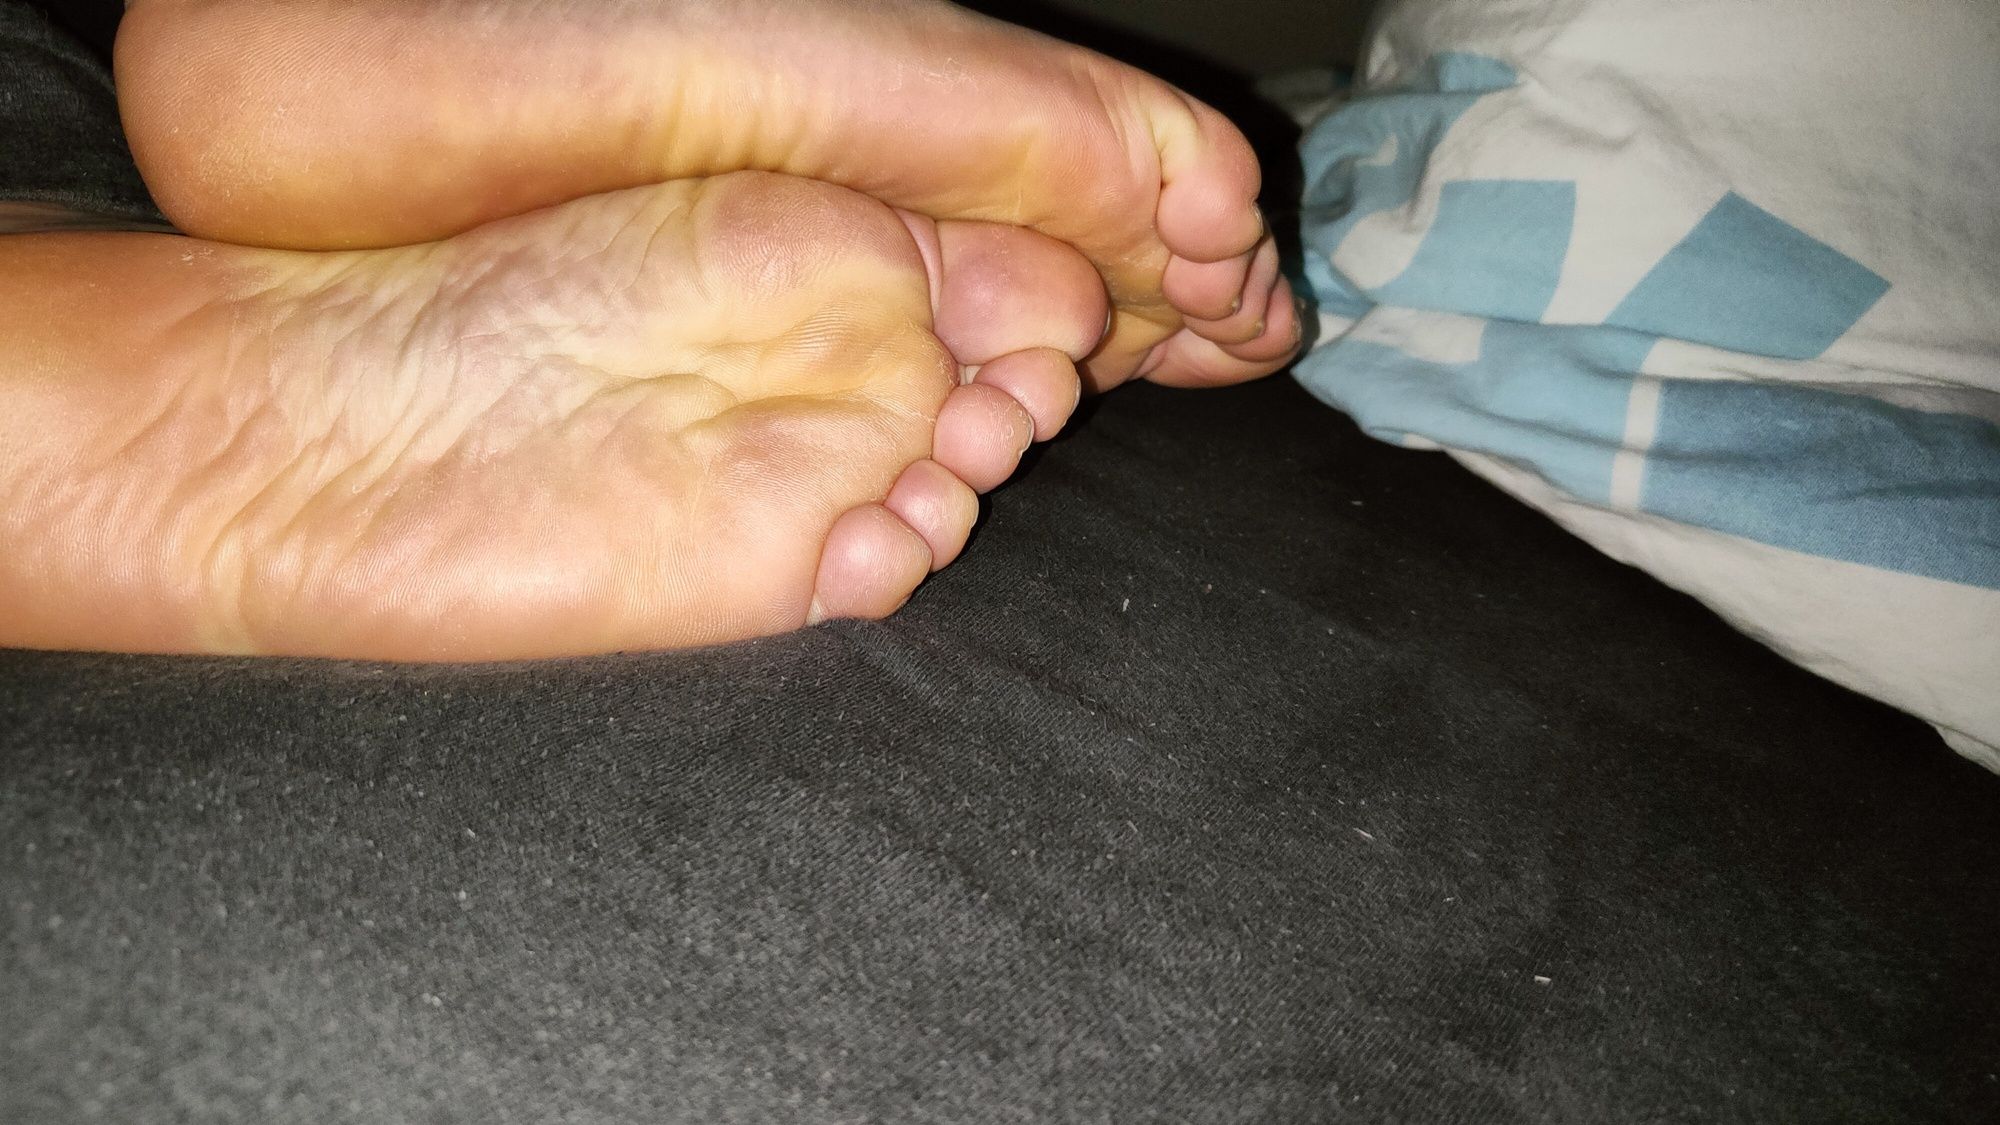 Sexy feet 2.0 #3